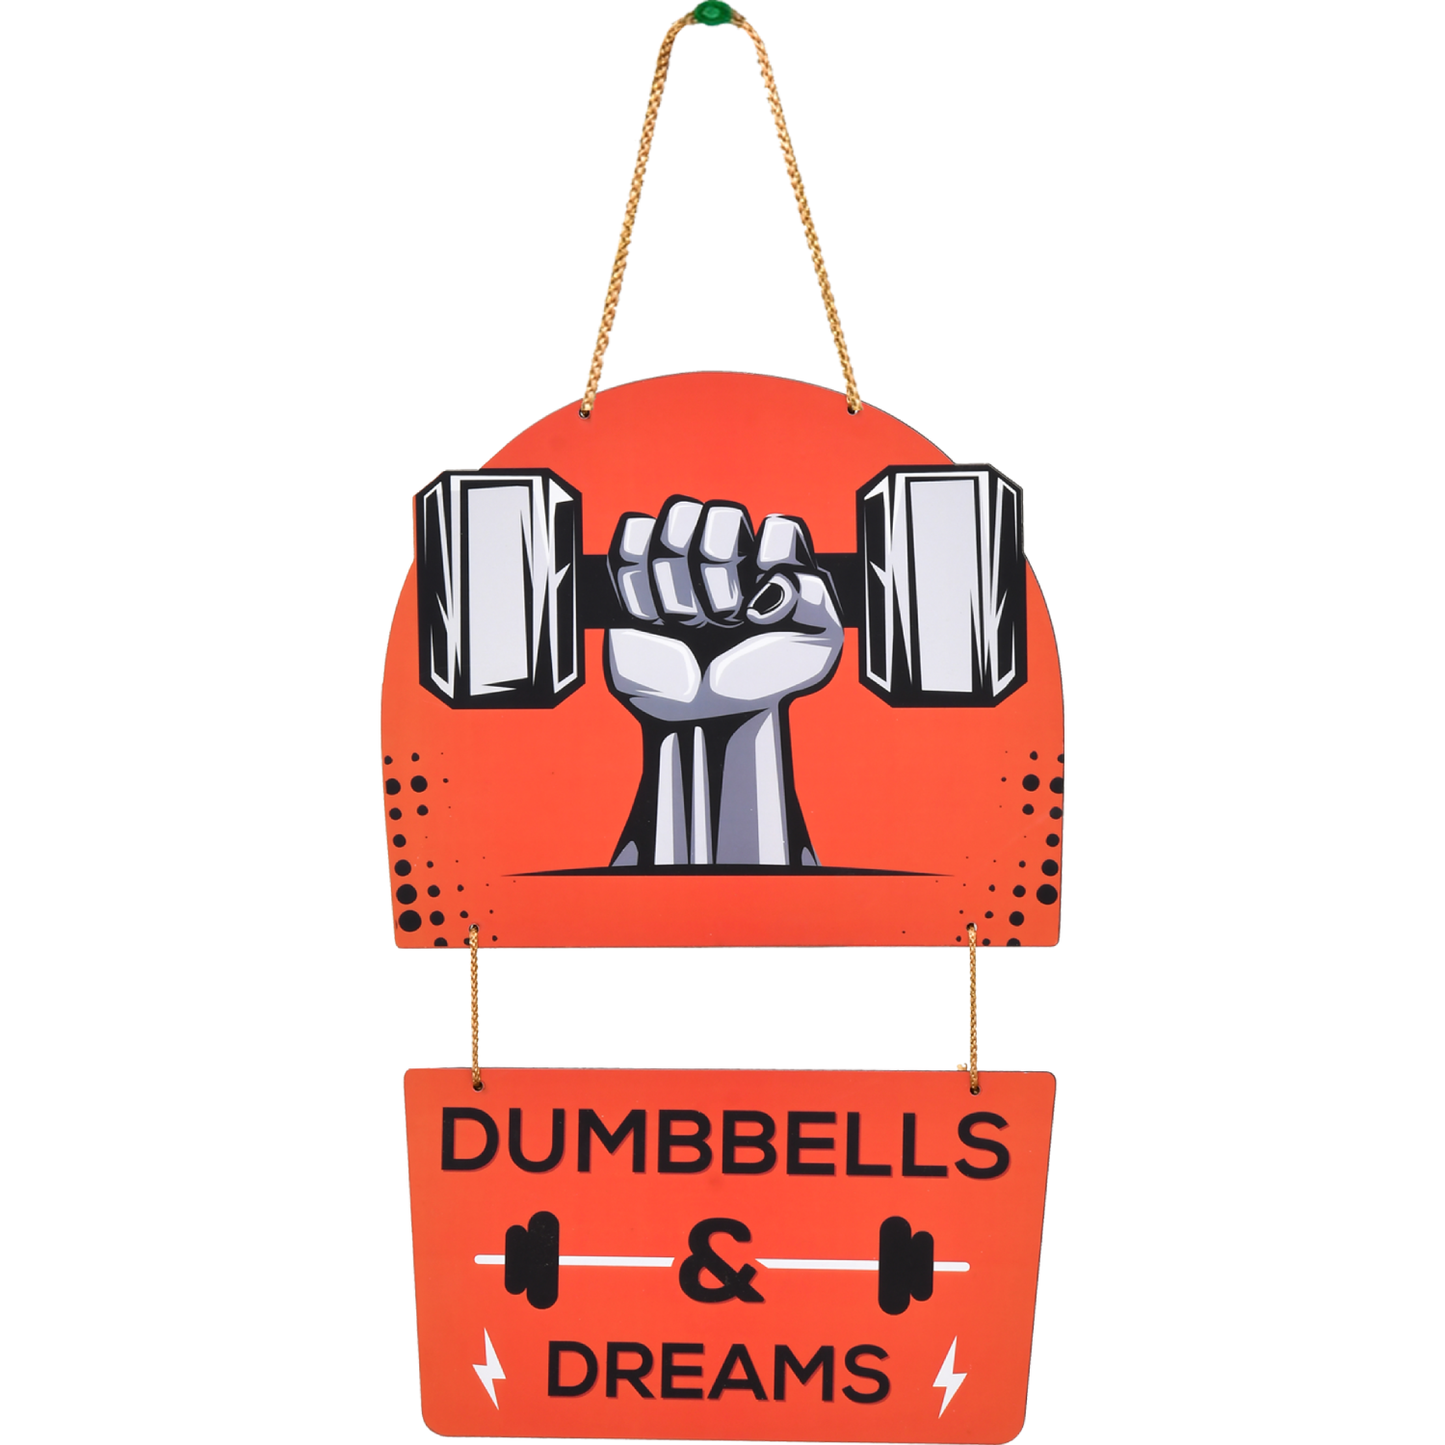 Dumbbells & Dreams Wall Hanging